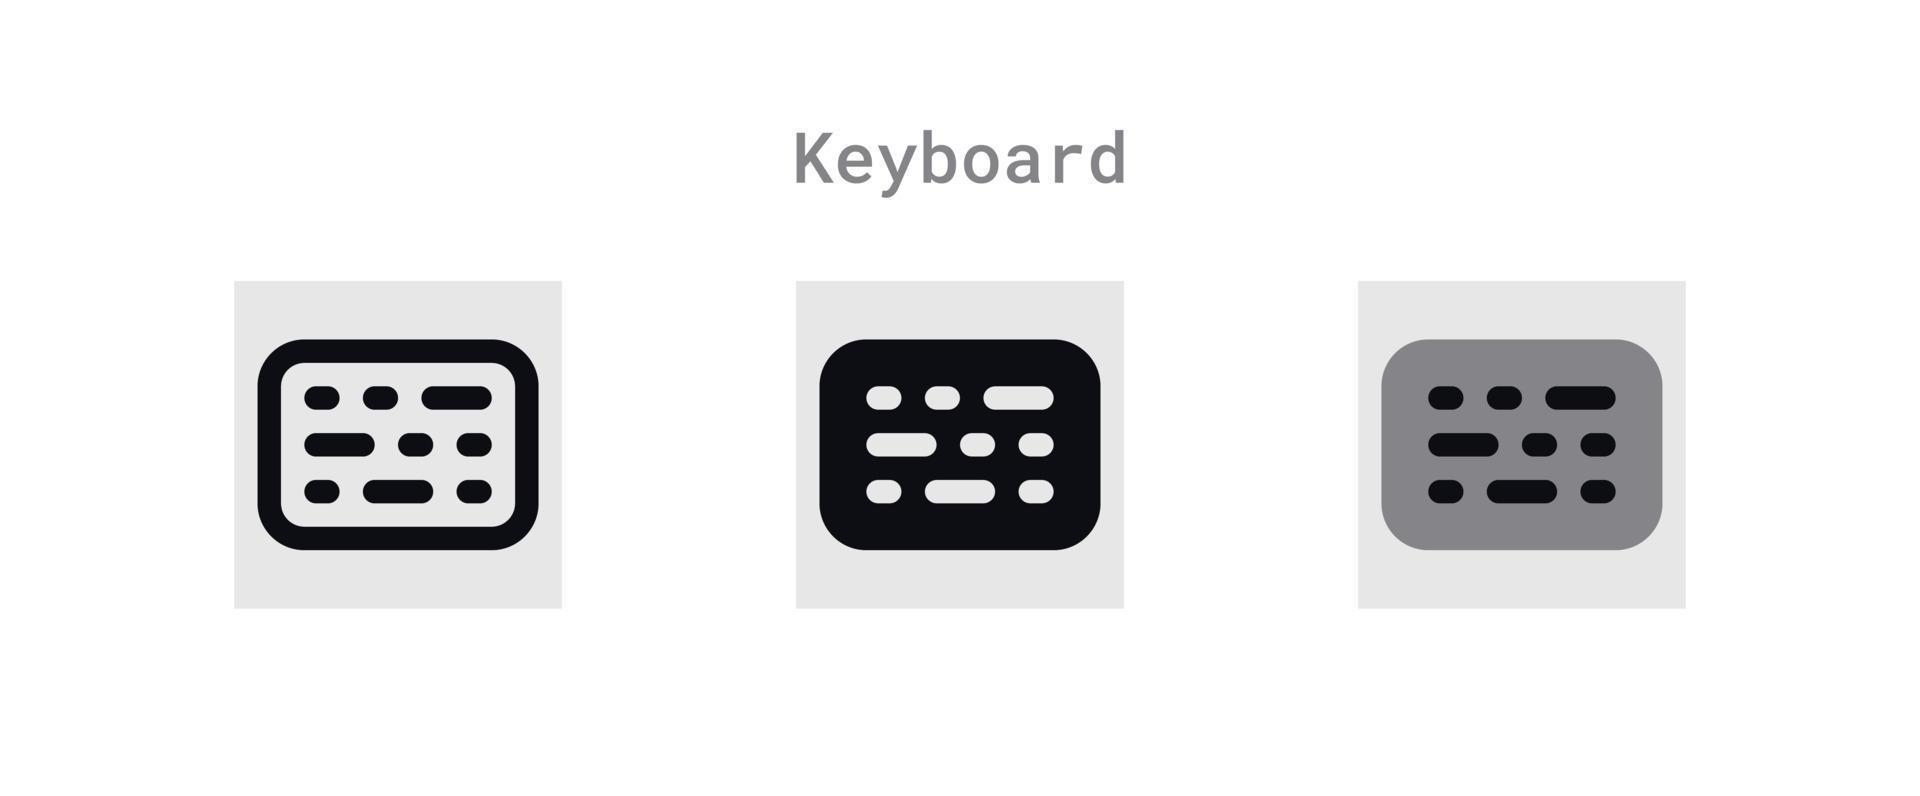 Keyboard Icons Sheet vector